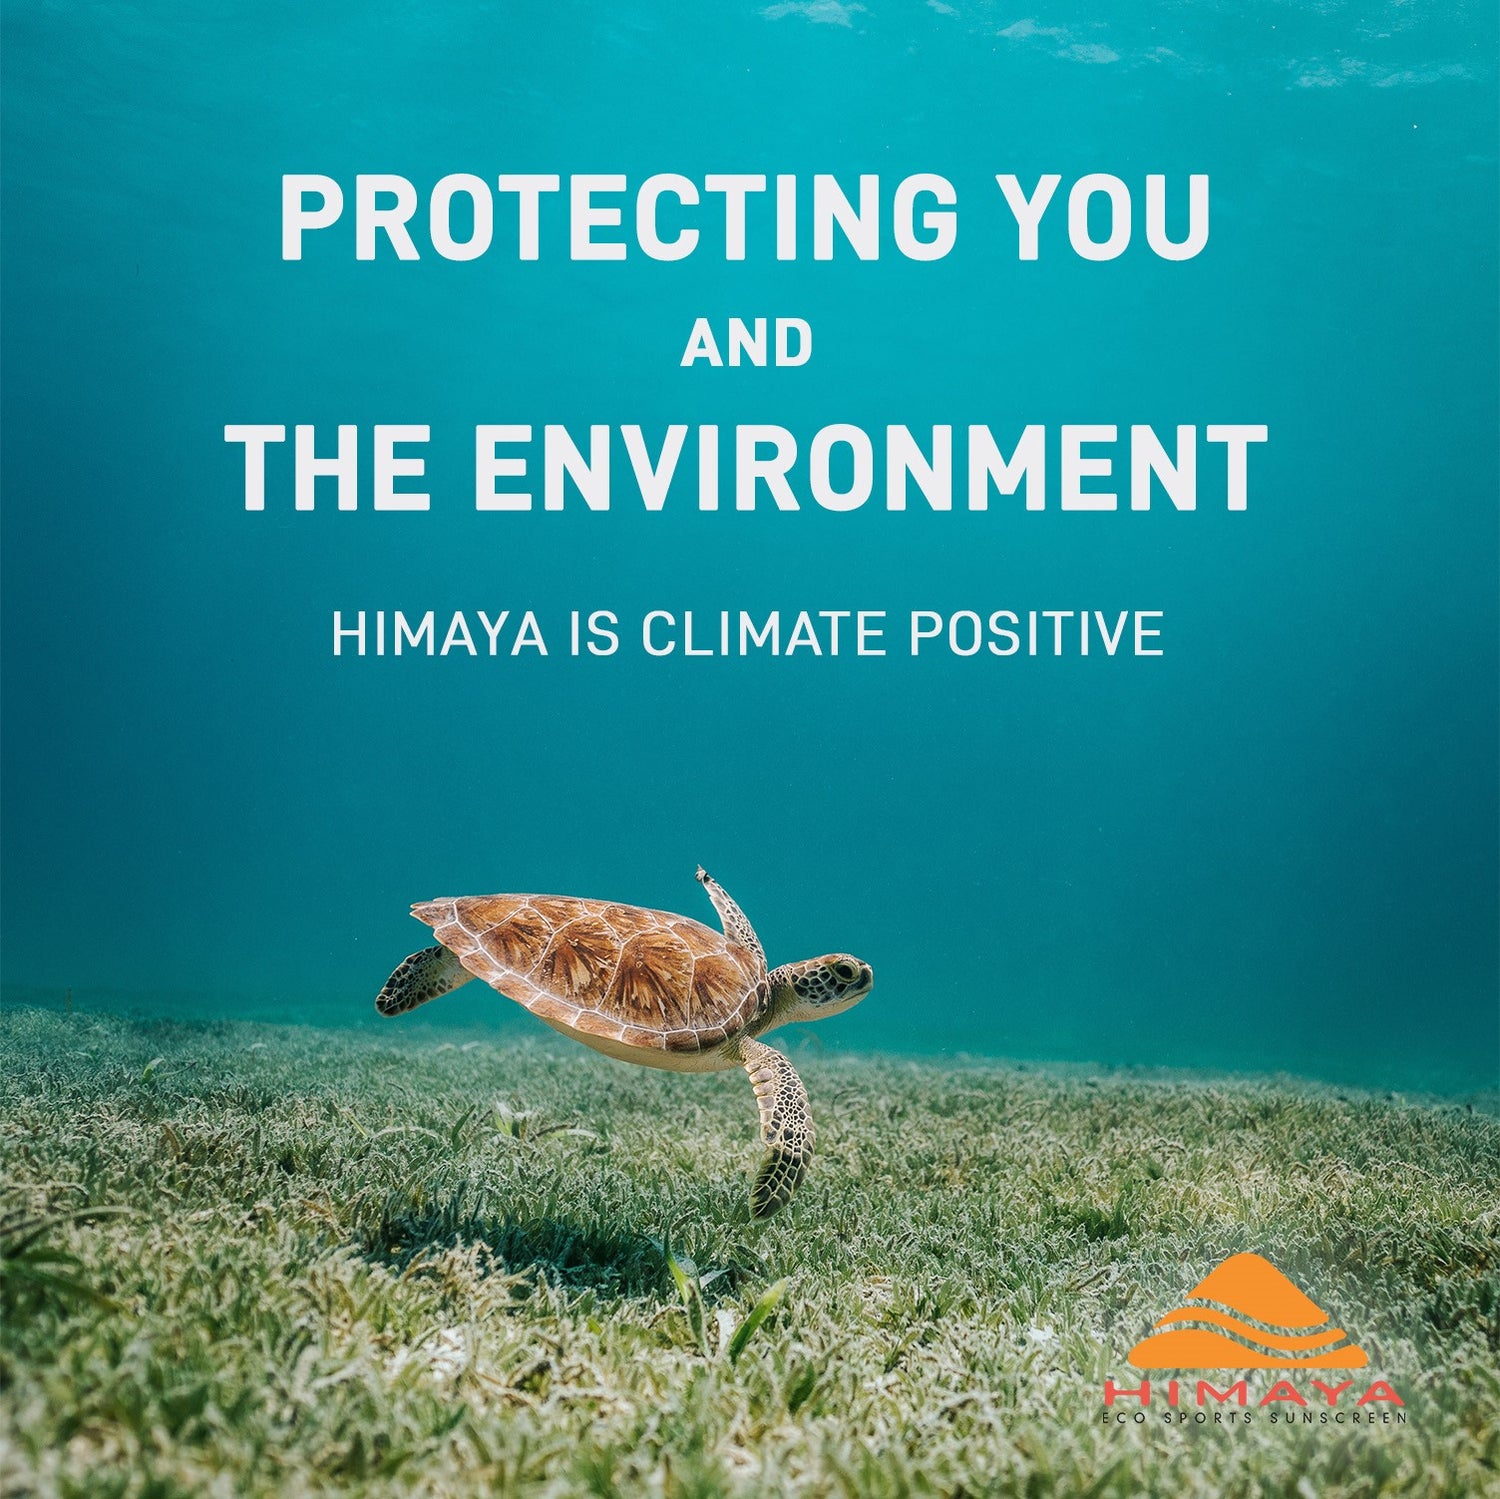 HIMAYA Natural Sunscreen SPF 50+ - 200ml – Mineral - Zinc - Reef Safe -Refillable - UVA UVB Himaya